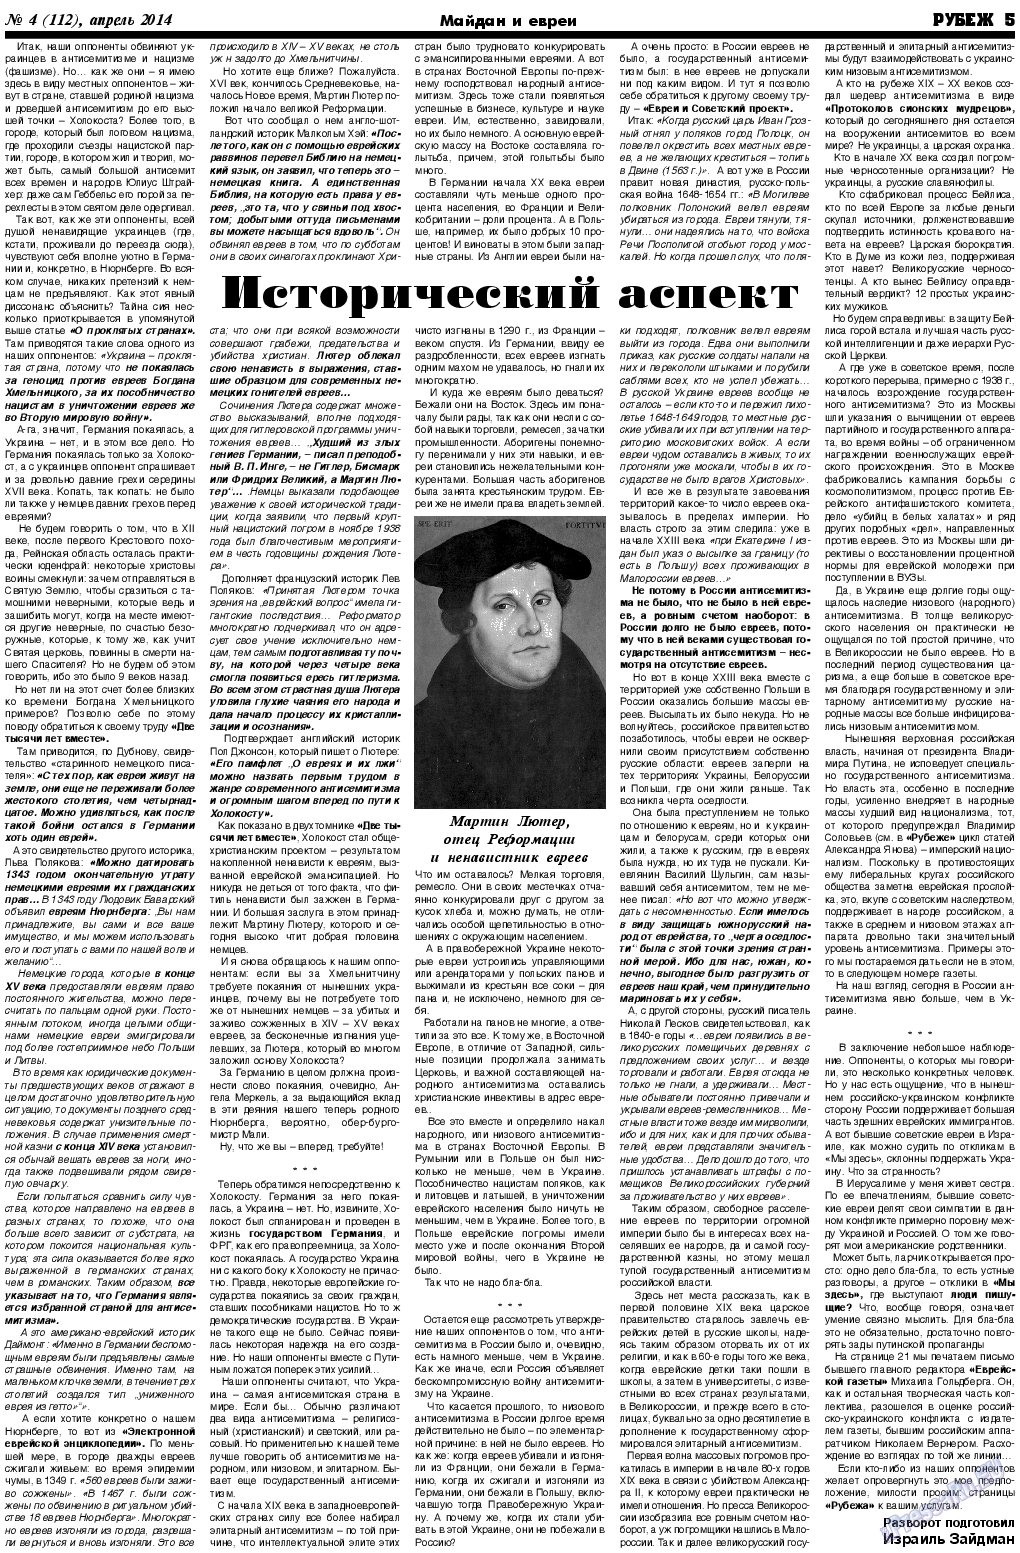 Рубеж, газета. 2014 №4 стр.5